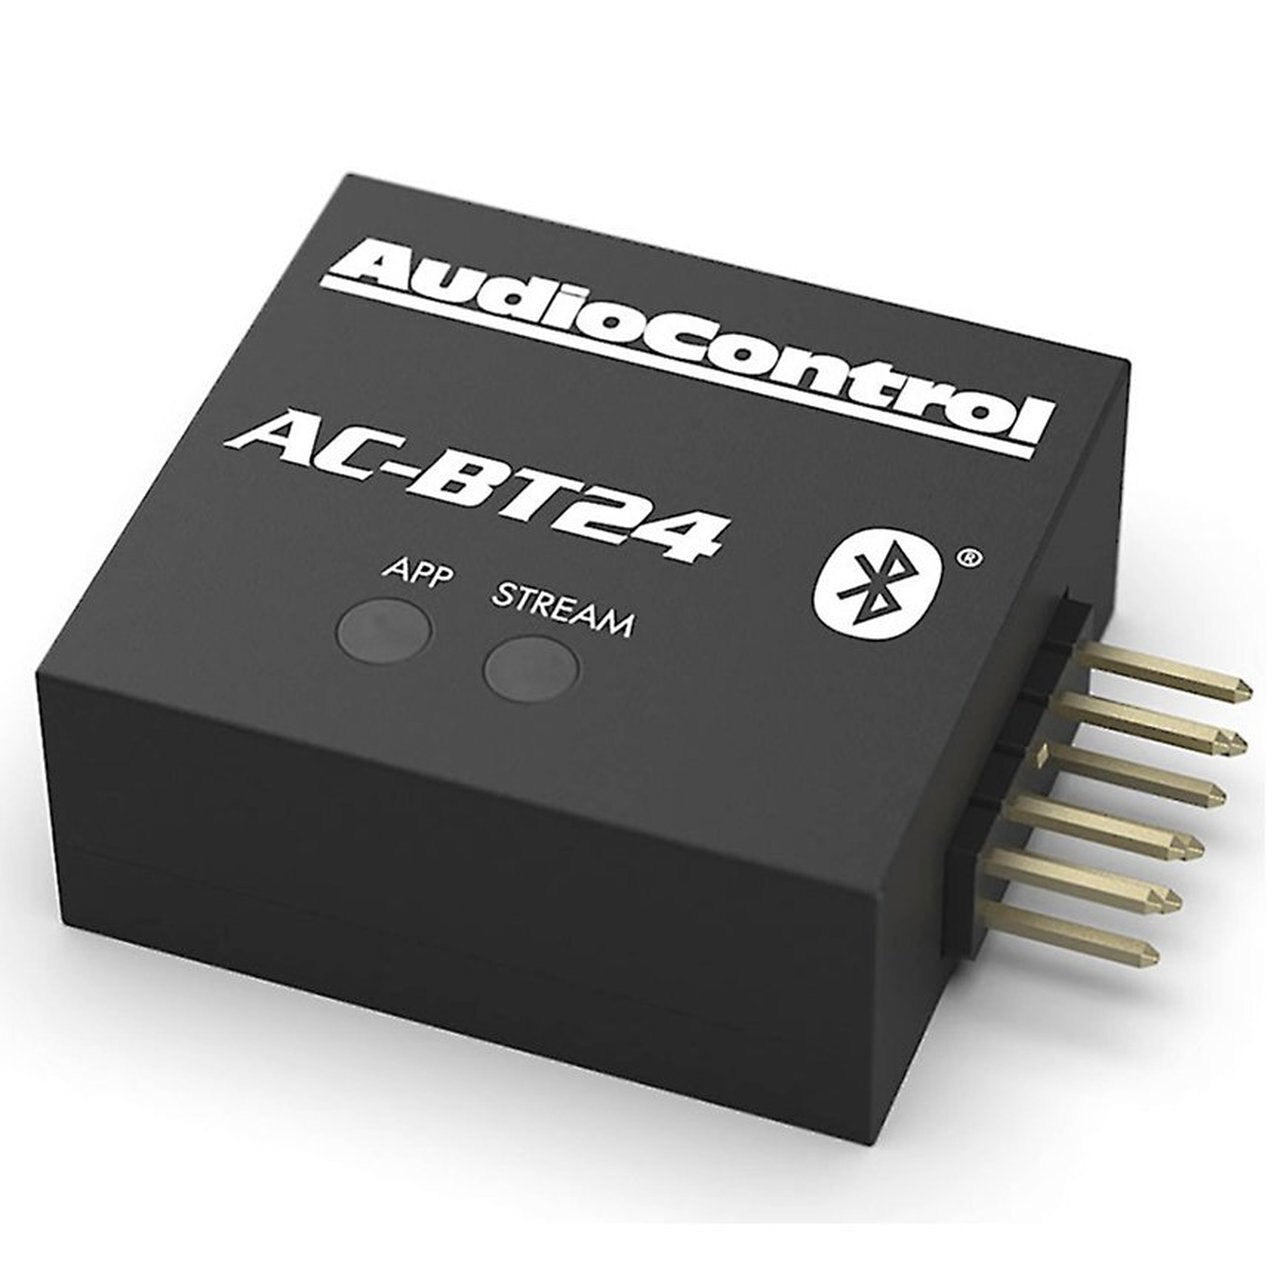 AudioControl AC-BT24, Bluetooth Audio Streamer & Programmer